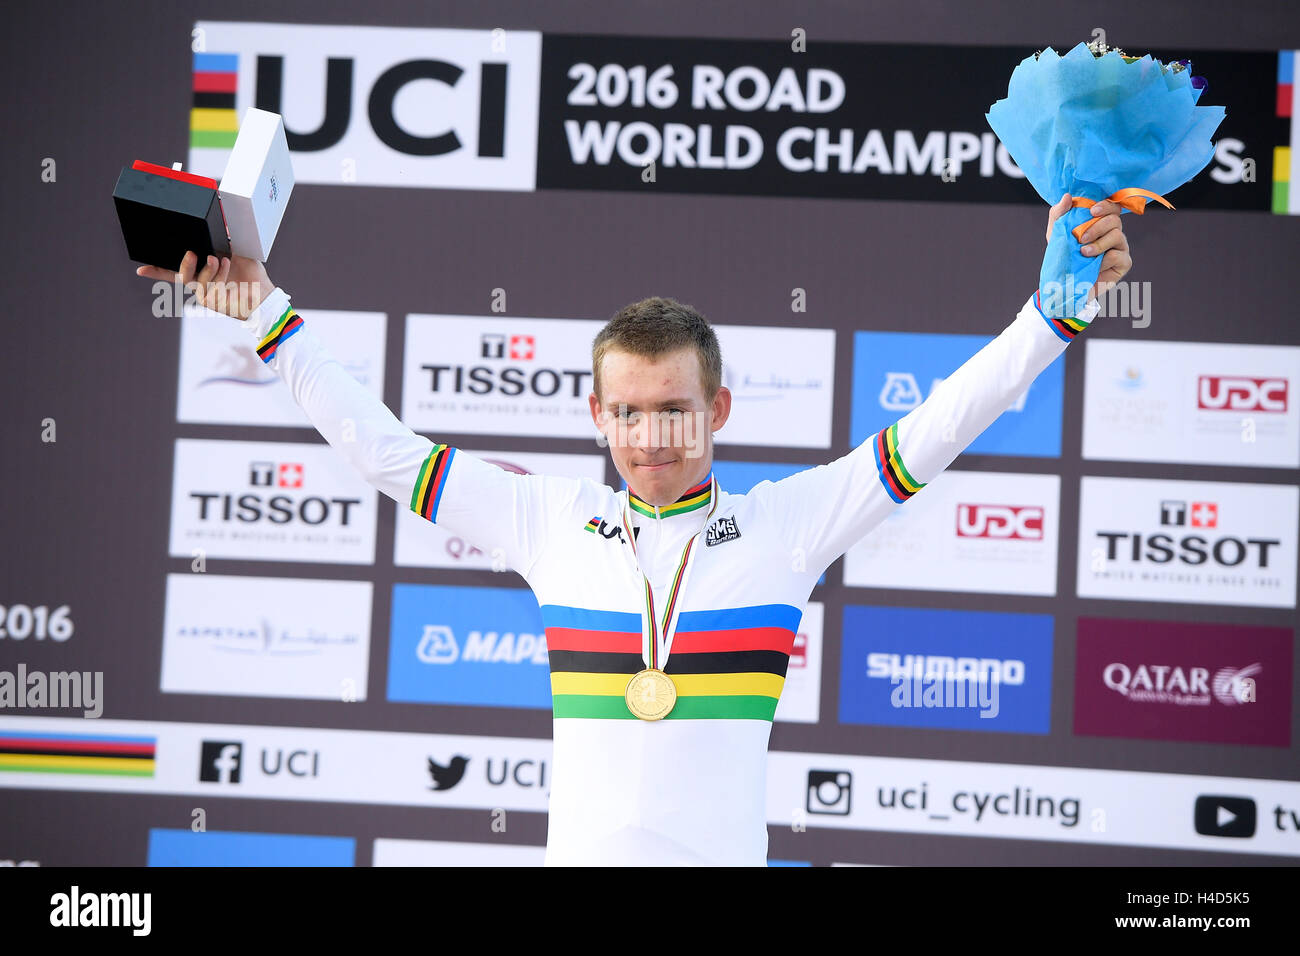 Norwegian Kristoffer Halvorsen celebrates on the podium after winning the men's under 23 road race at the 2016 UCI World Road World Cycling Championships in Doha, Qatar, Thursday 13 October 2016. BELGA PHOTO YORICK JANSENS Stock Photo